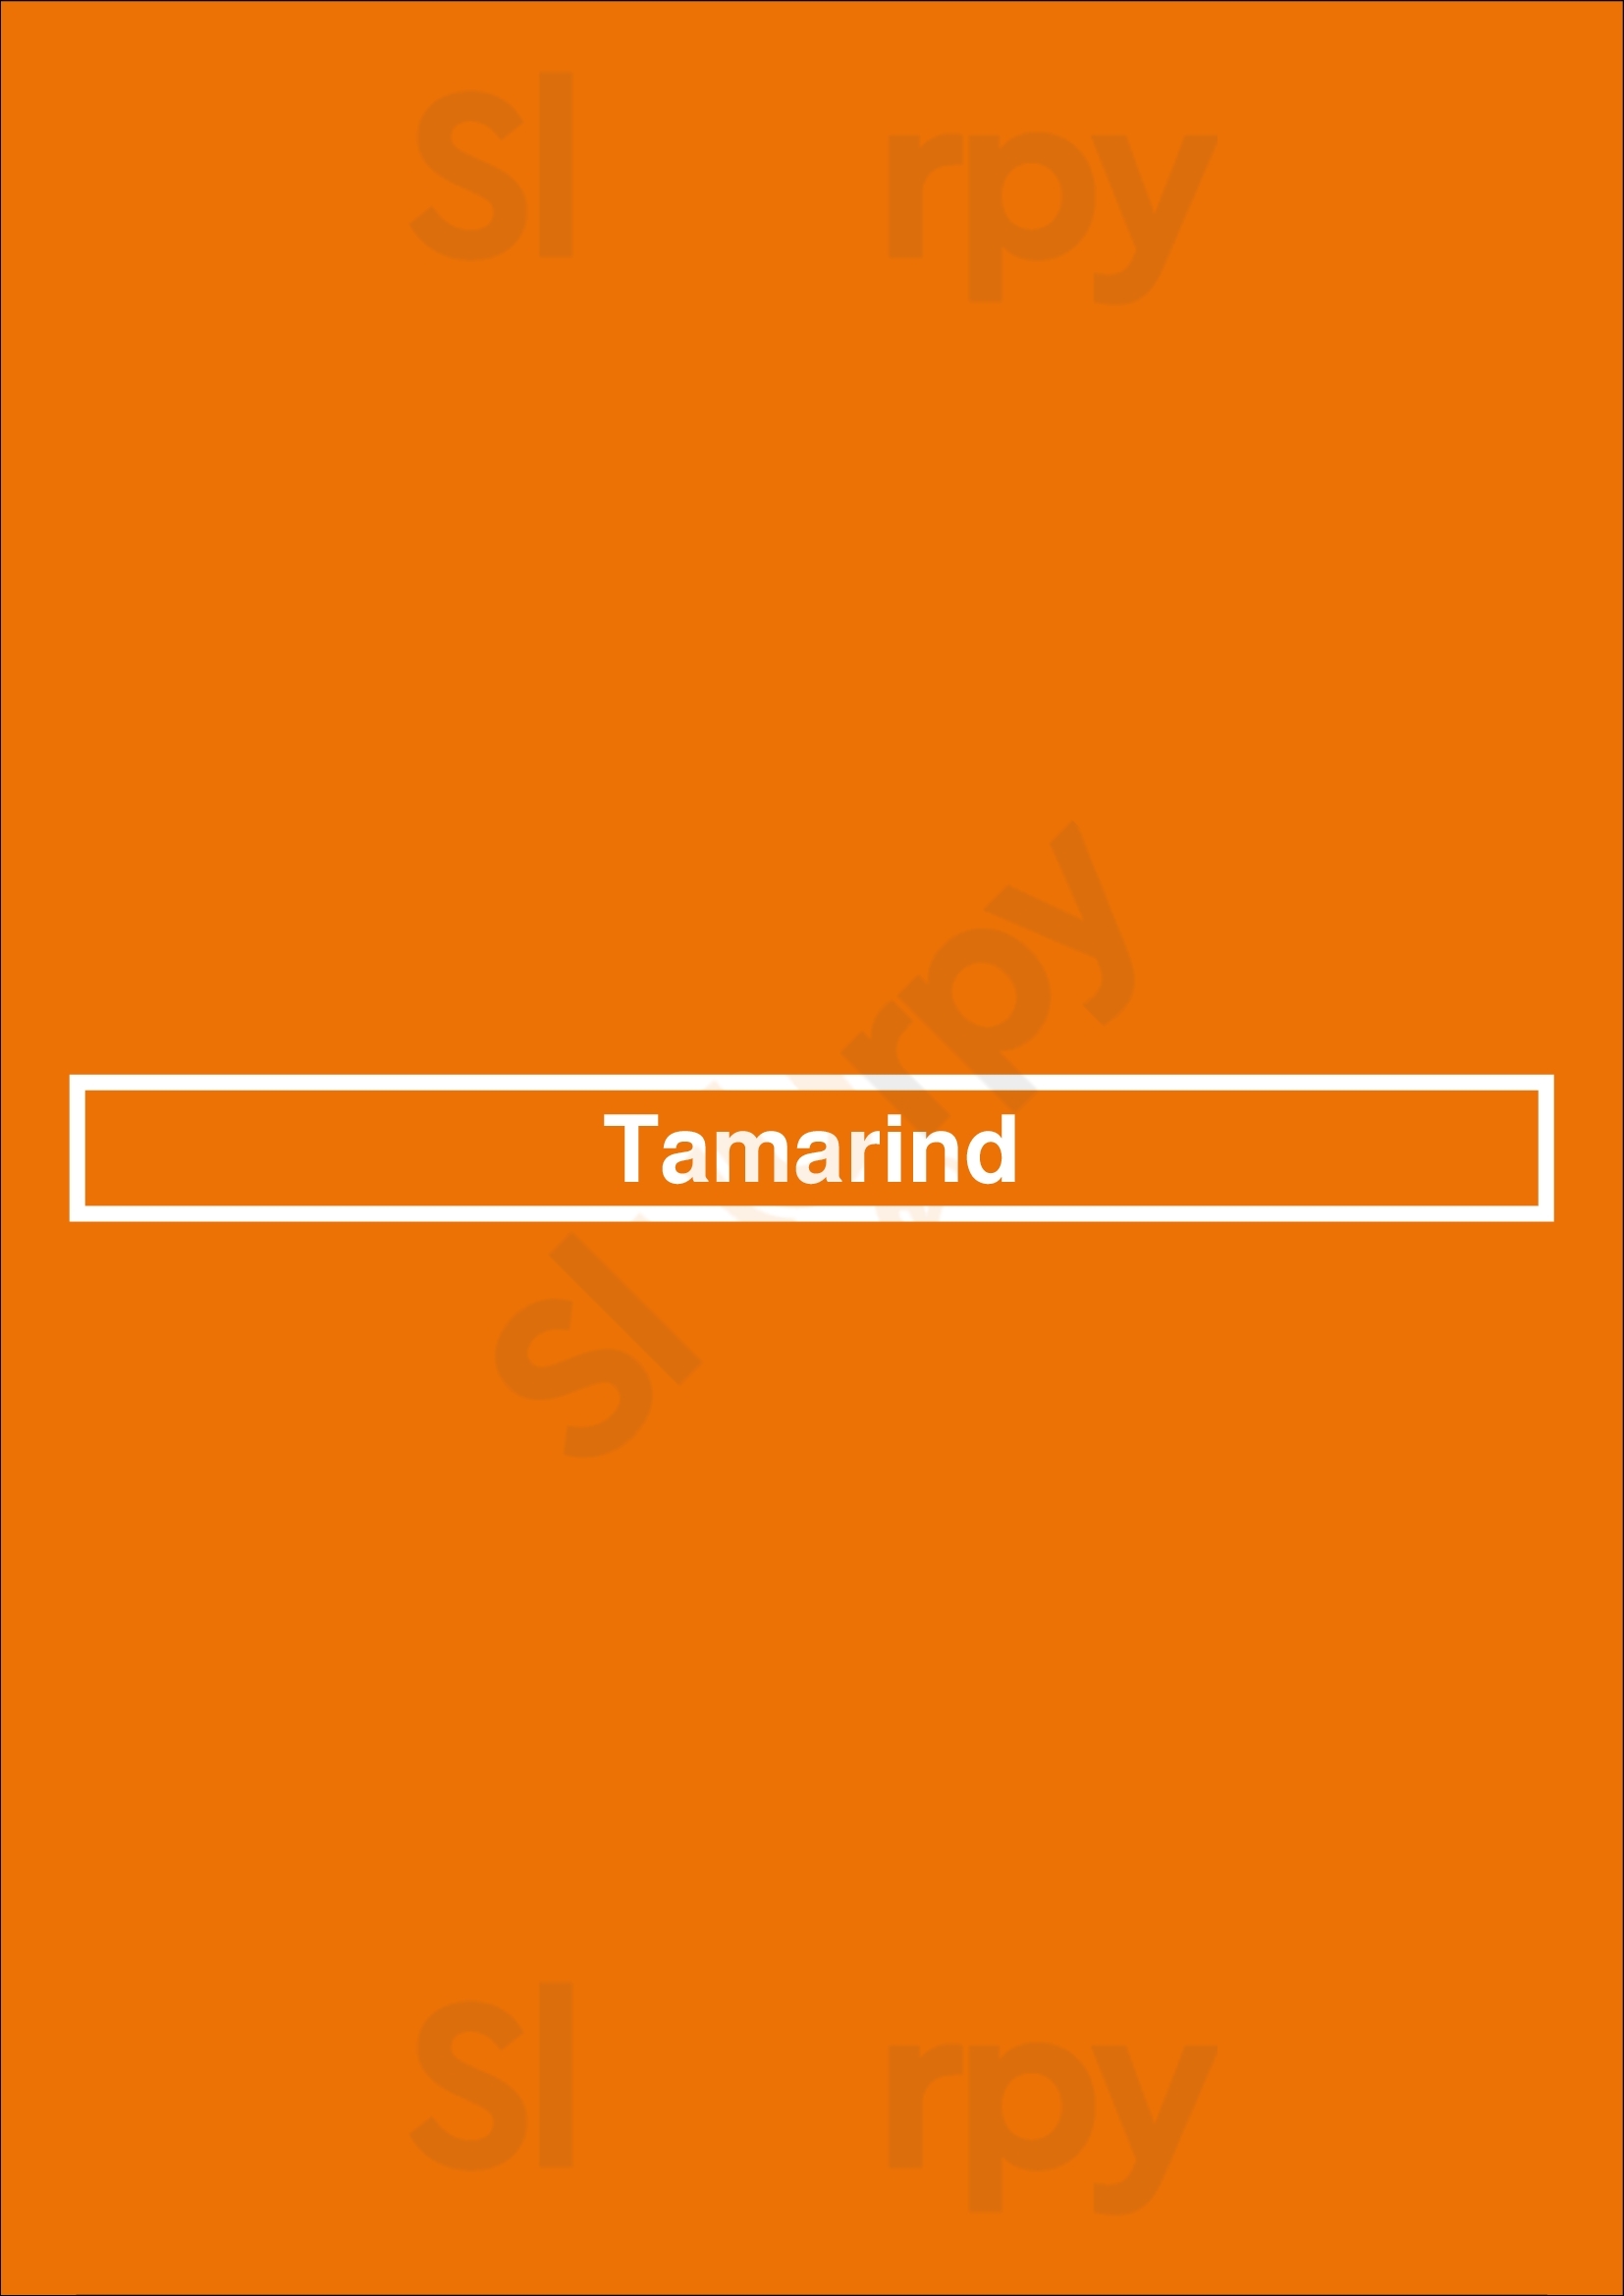 Tamarind Lisboa Menu - 1